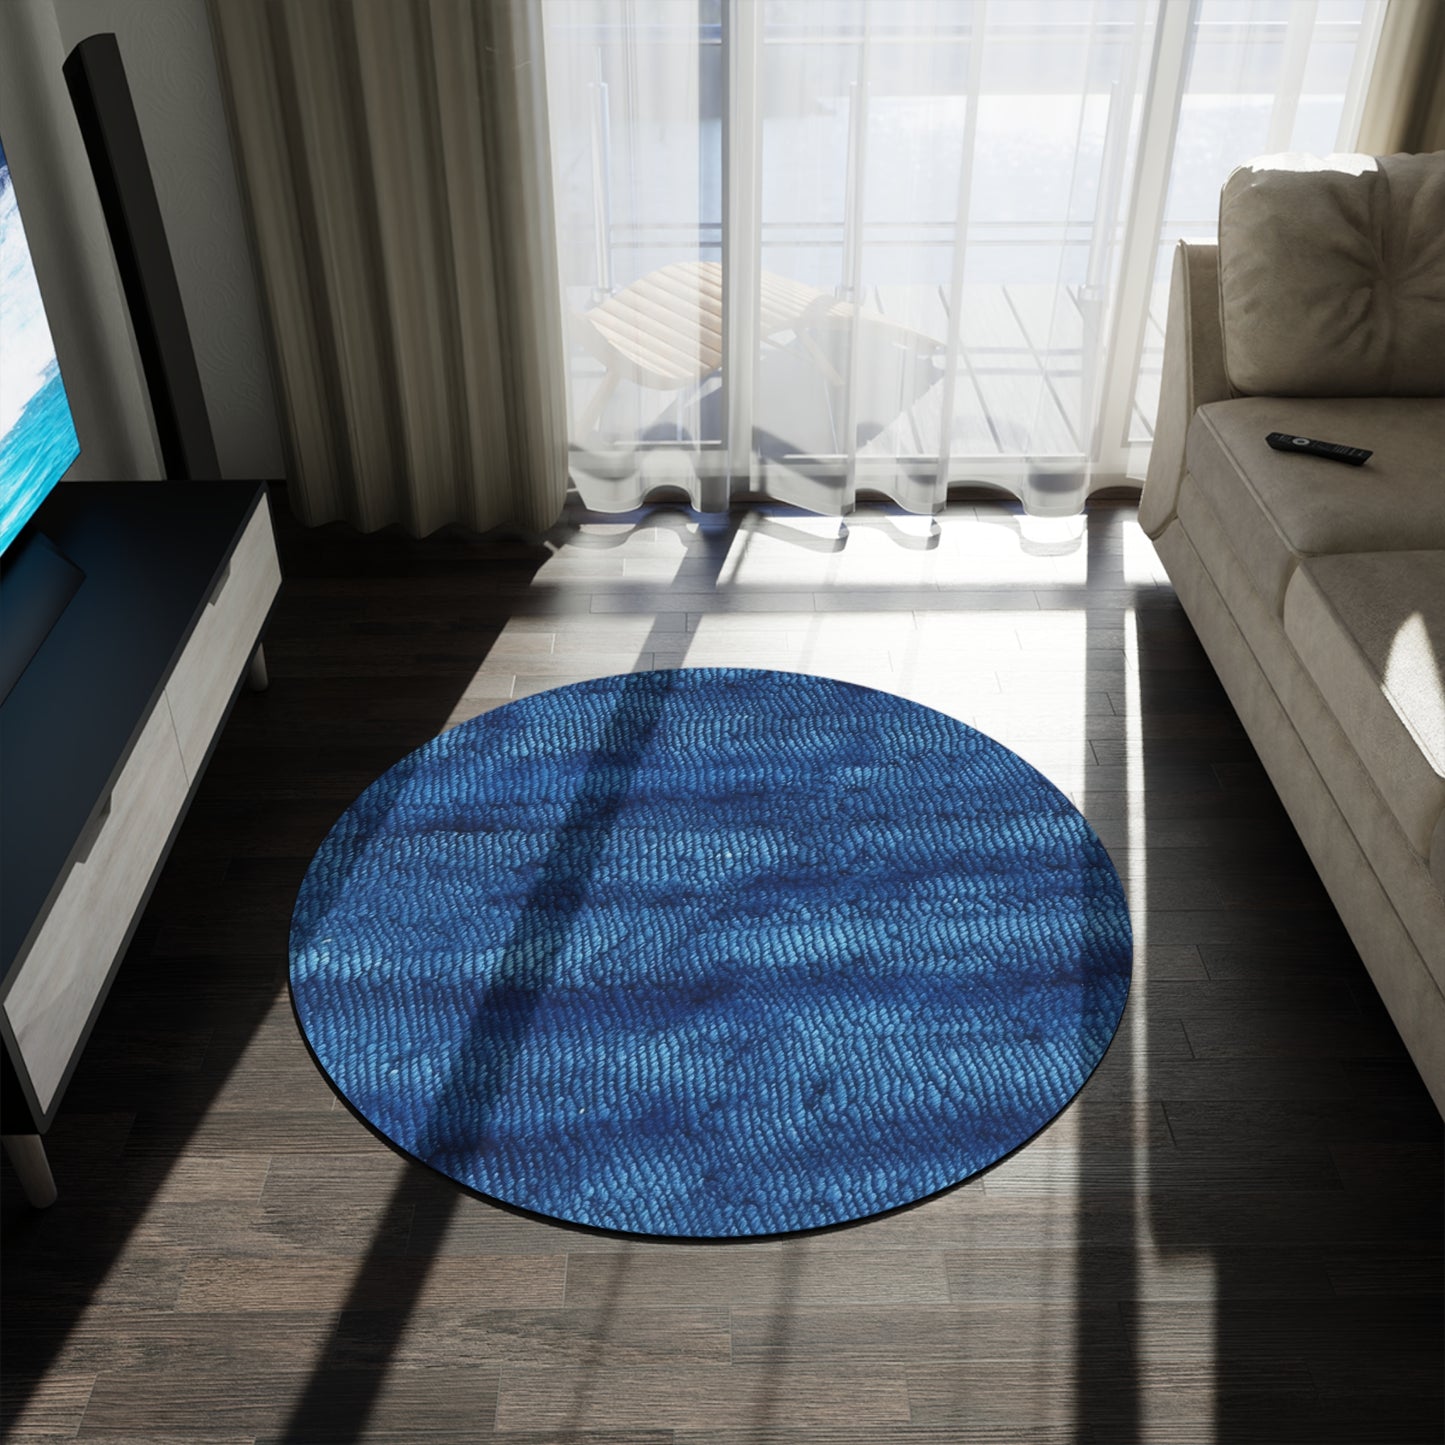 Blue Spectrum: Denim-Inspired Fabric Light to Dark - Round Rug